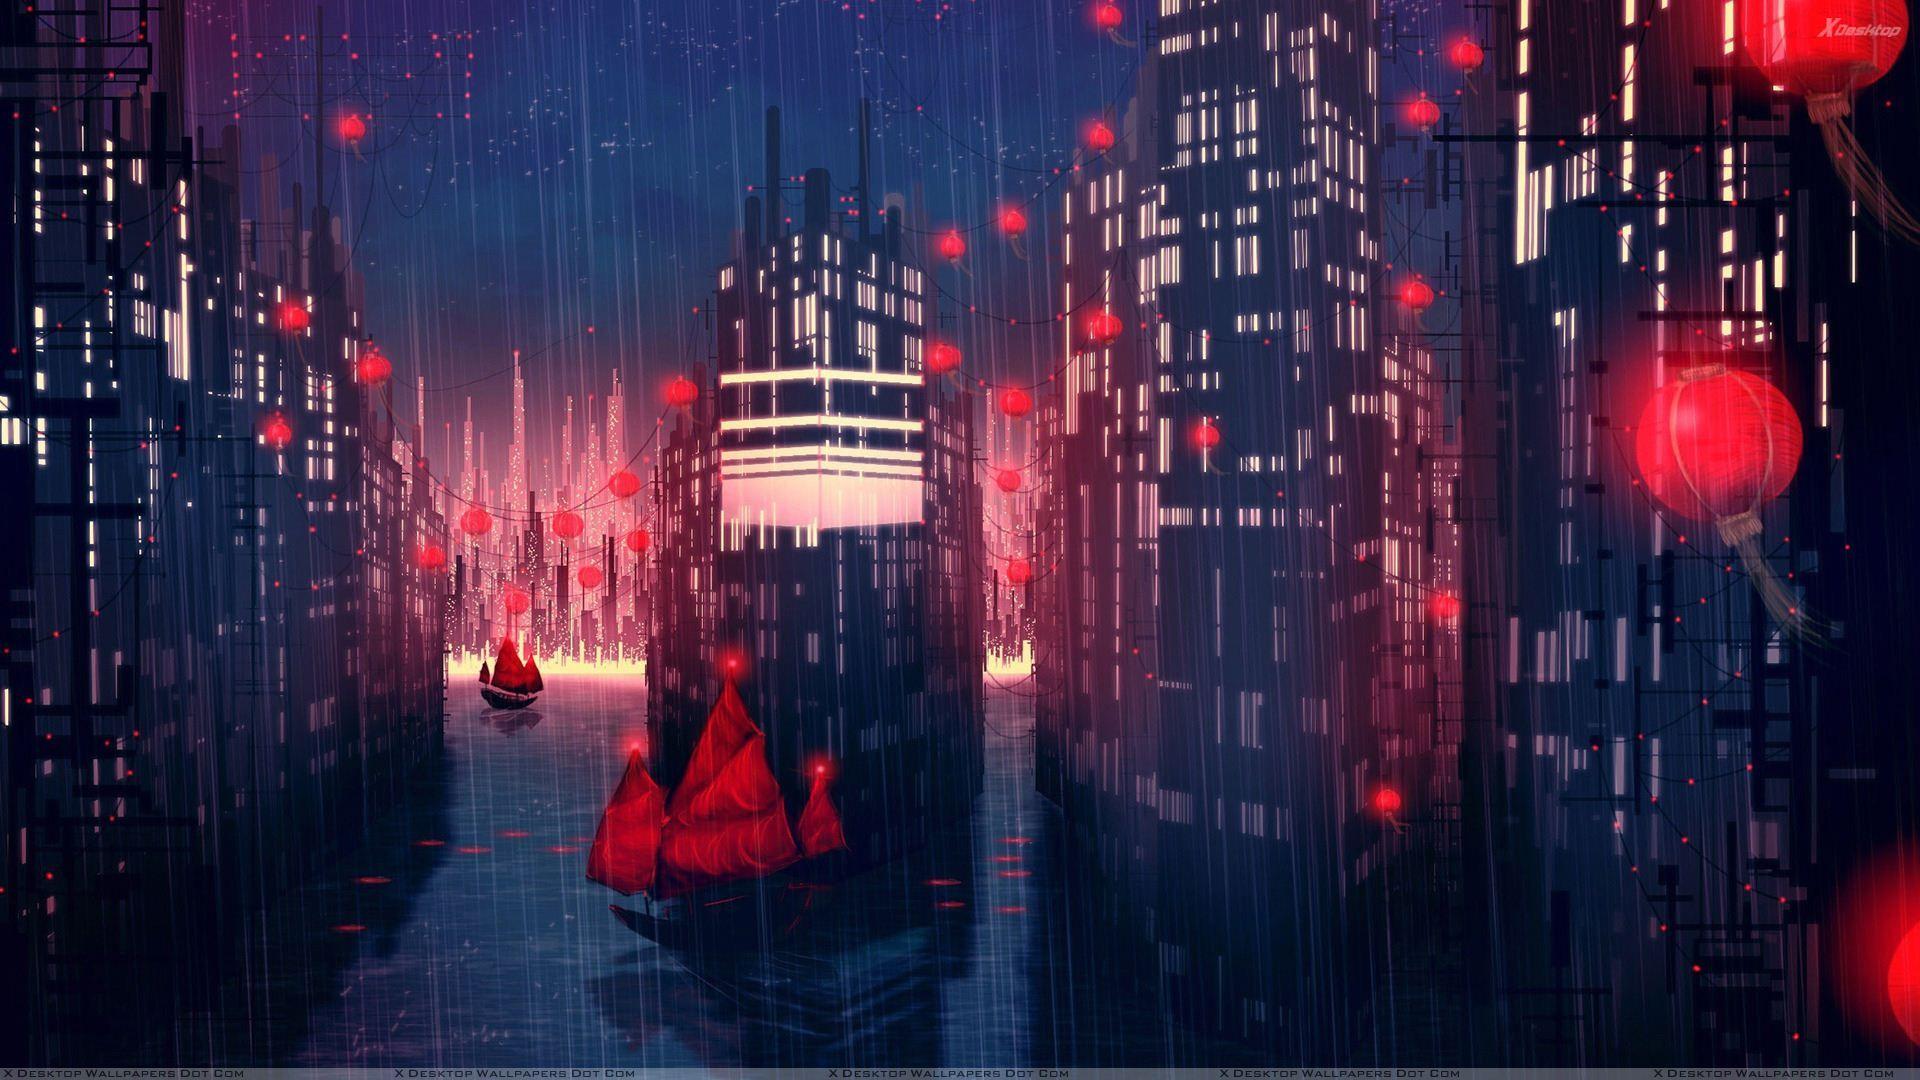 Rainy Red City Night Scene 1920×1080 Wallpaper Wp3809210